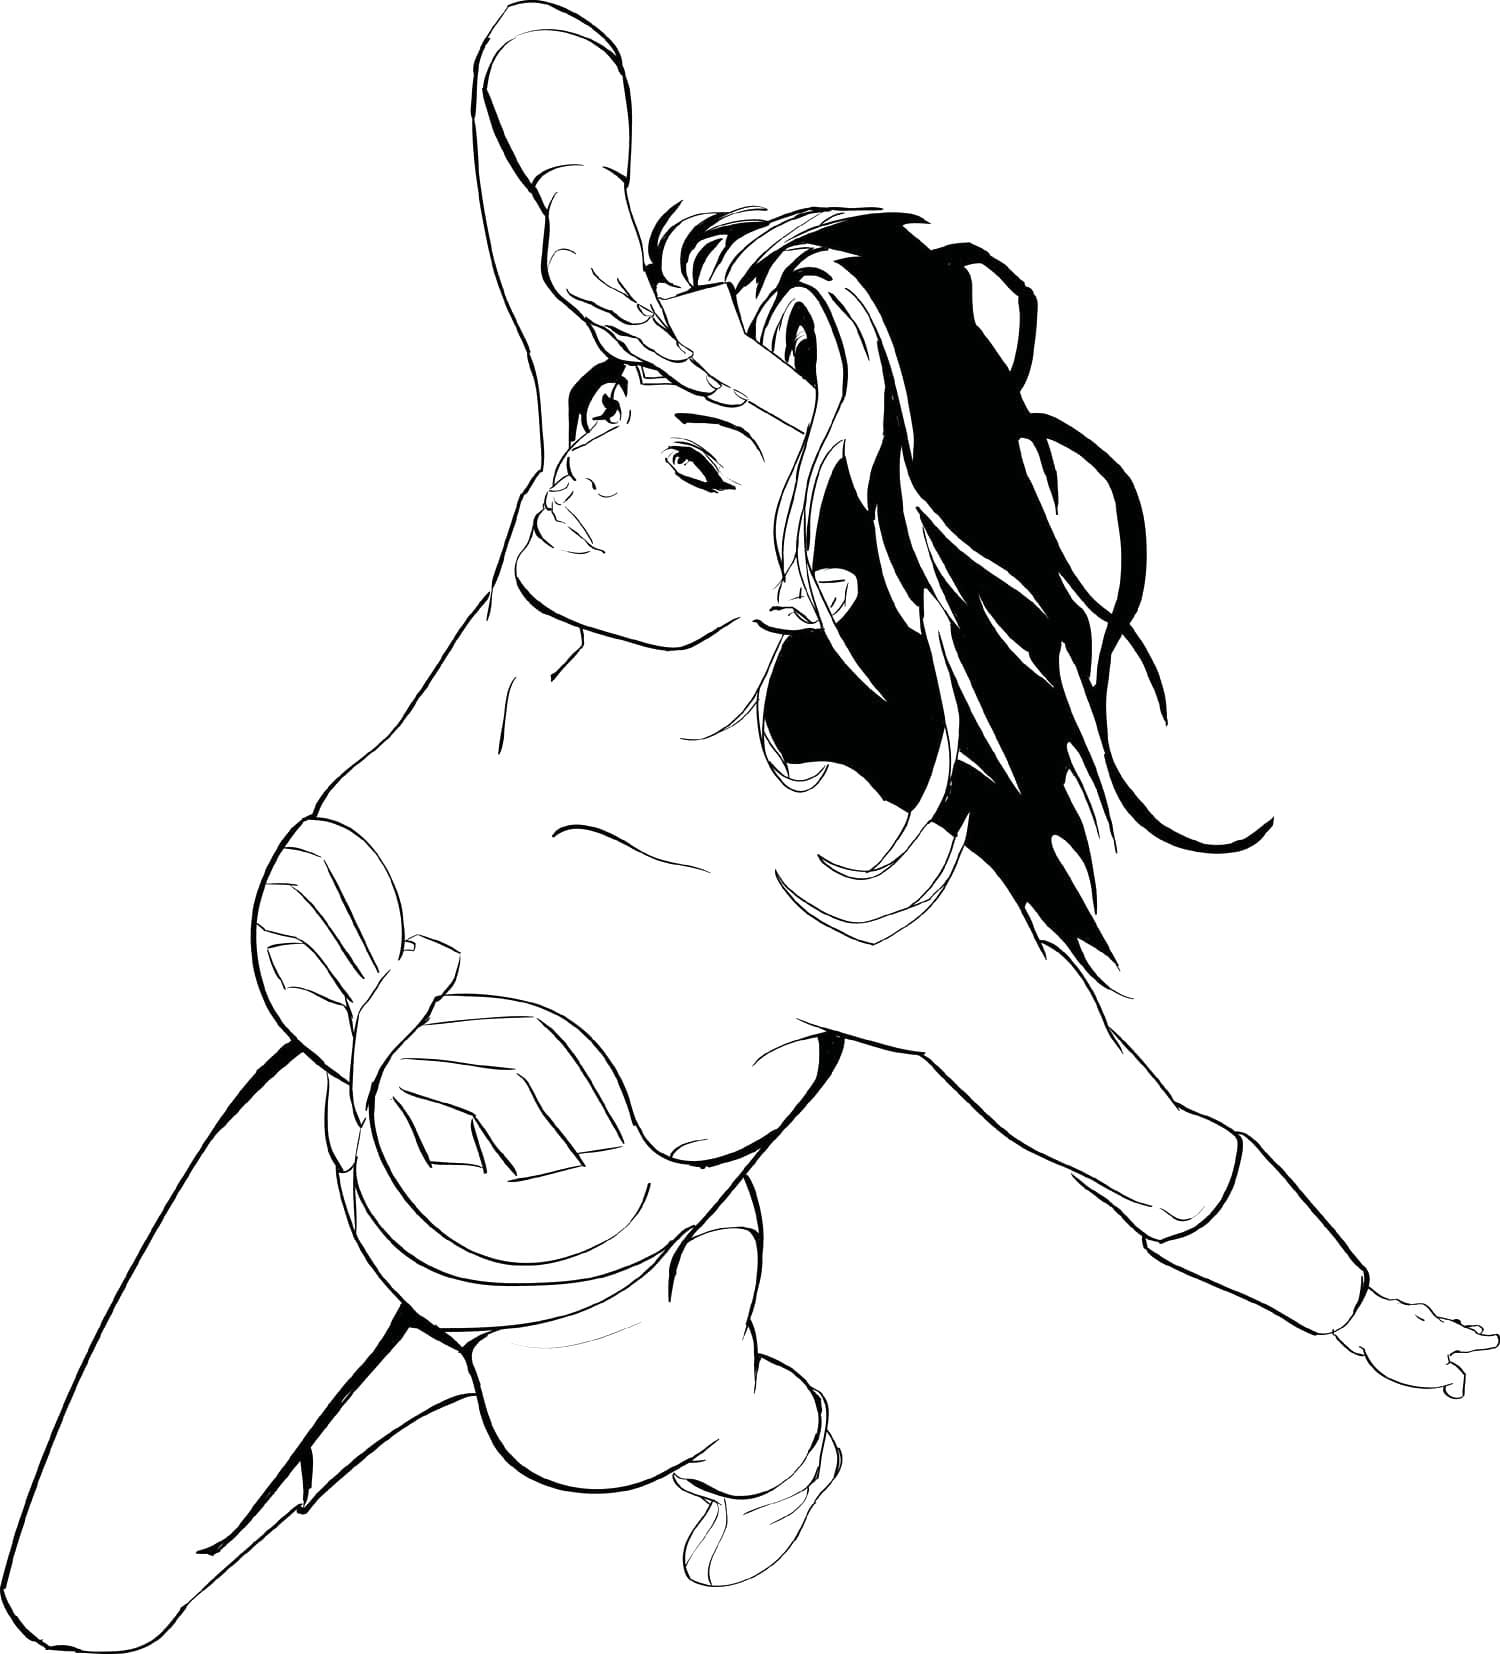 DC Wonder Woman coloring page